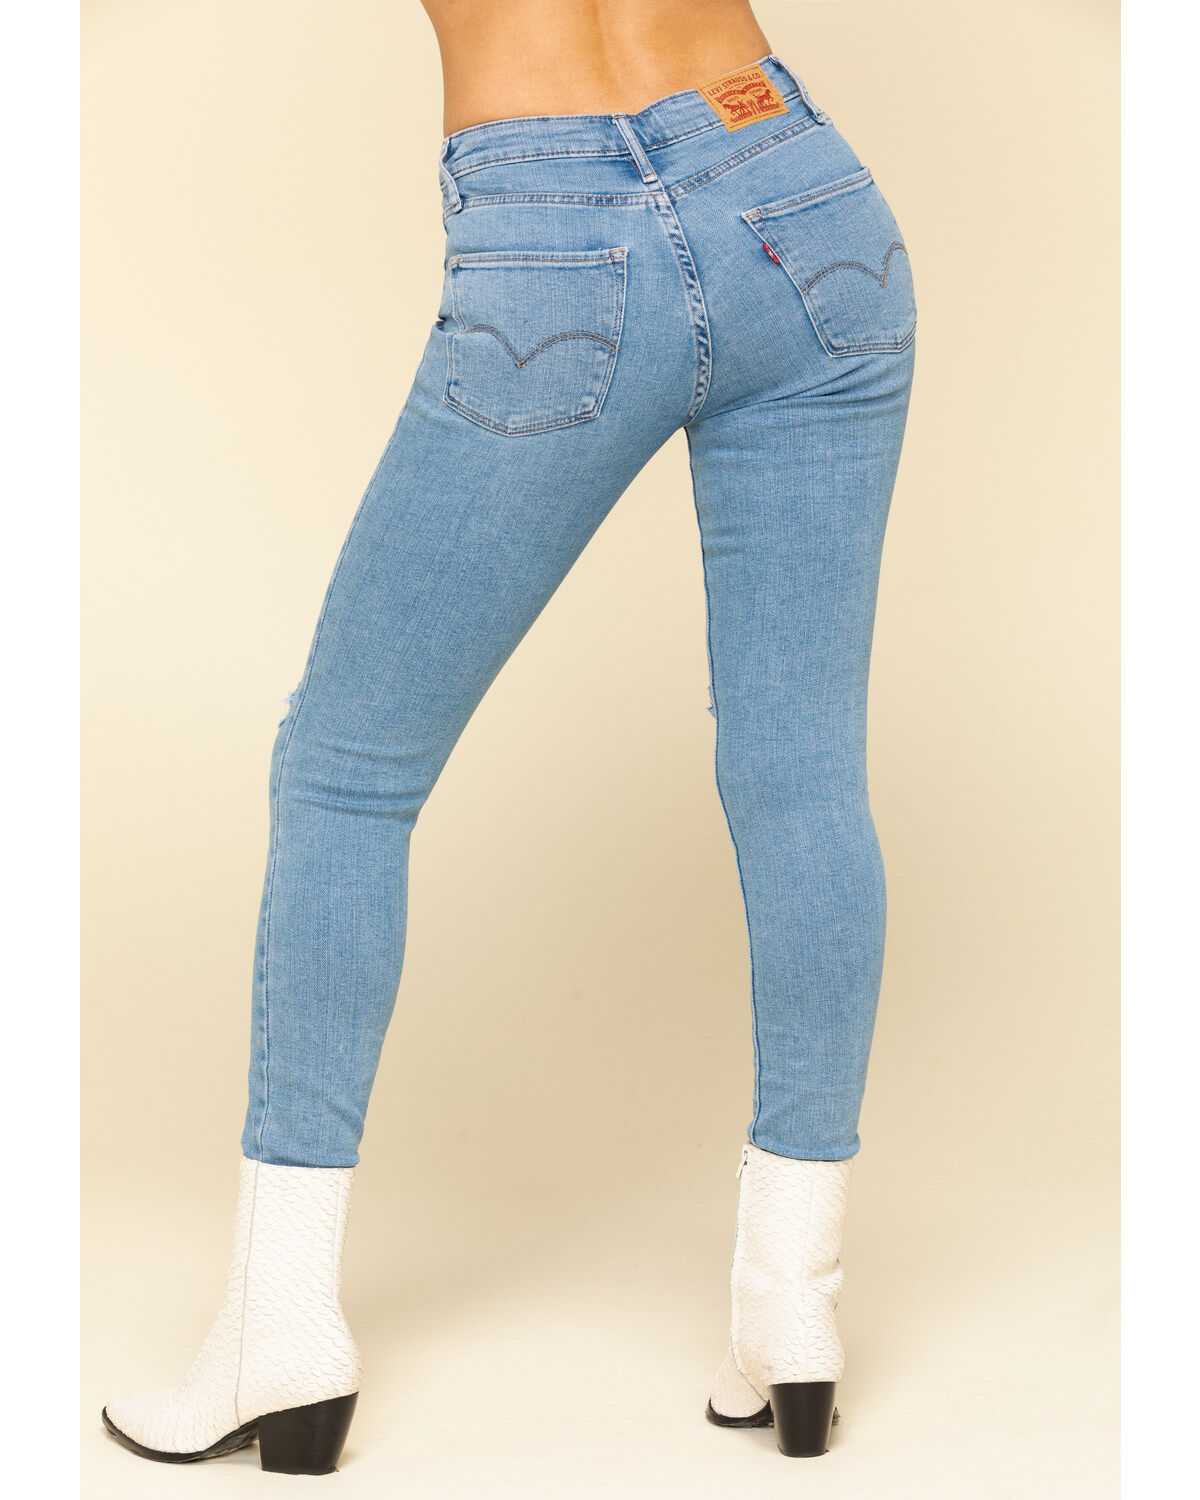 Levi's Women's 721 High-Rise Skinny Jeans - Azure Glow